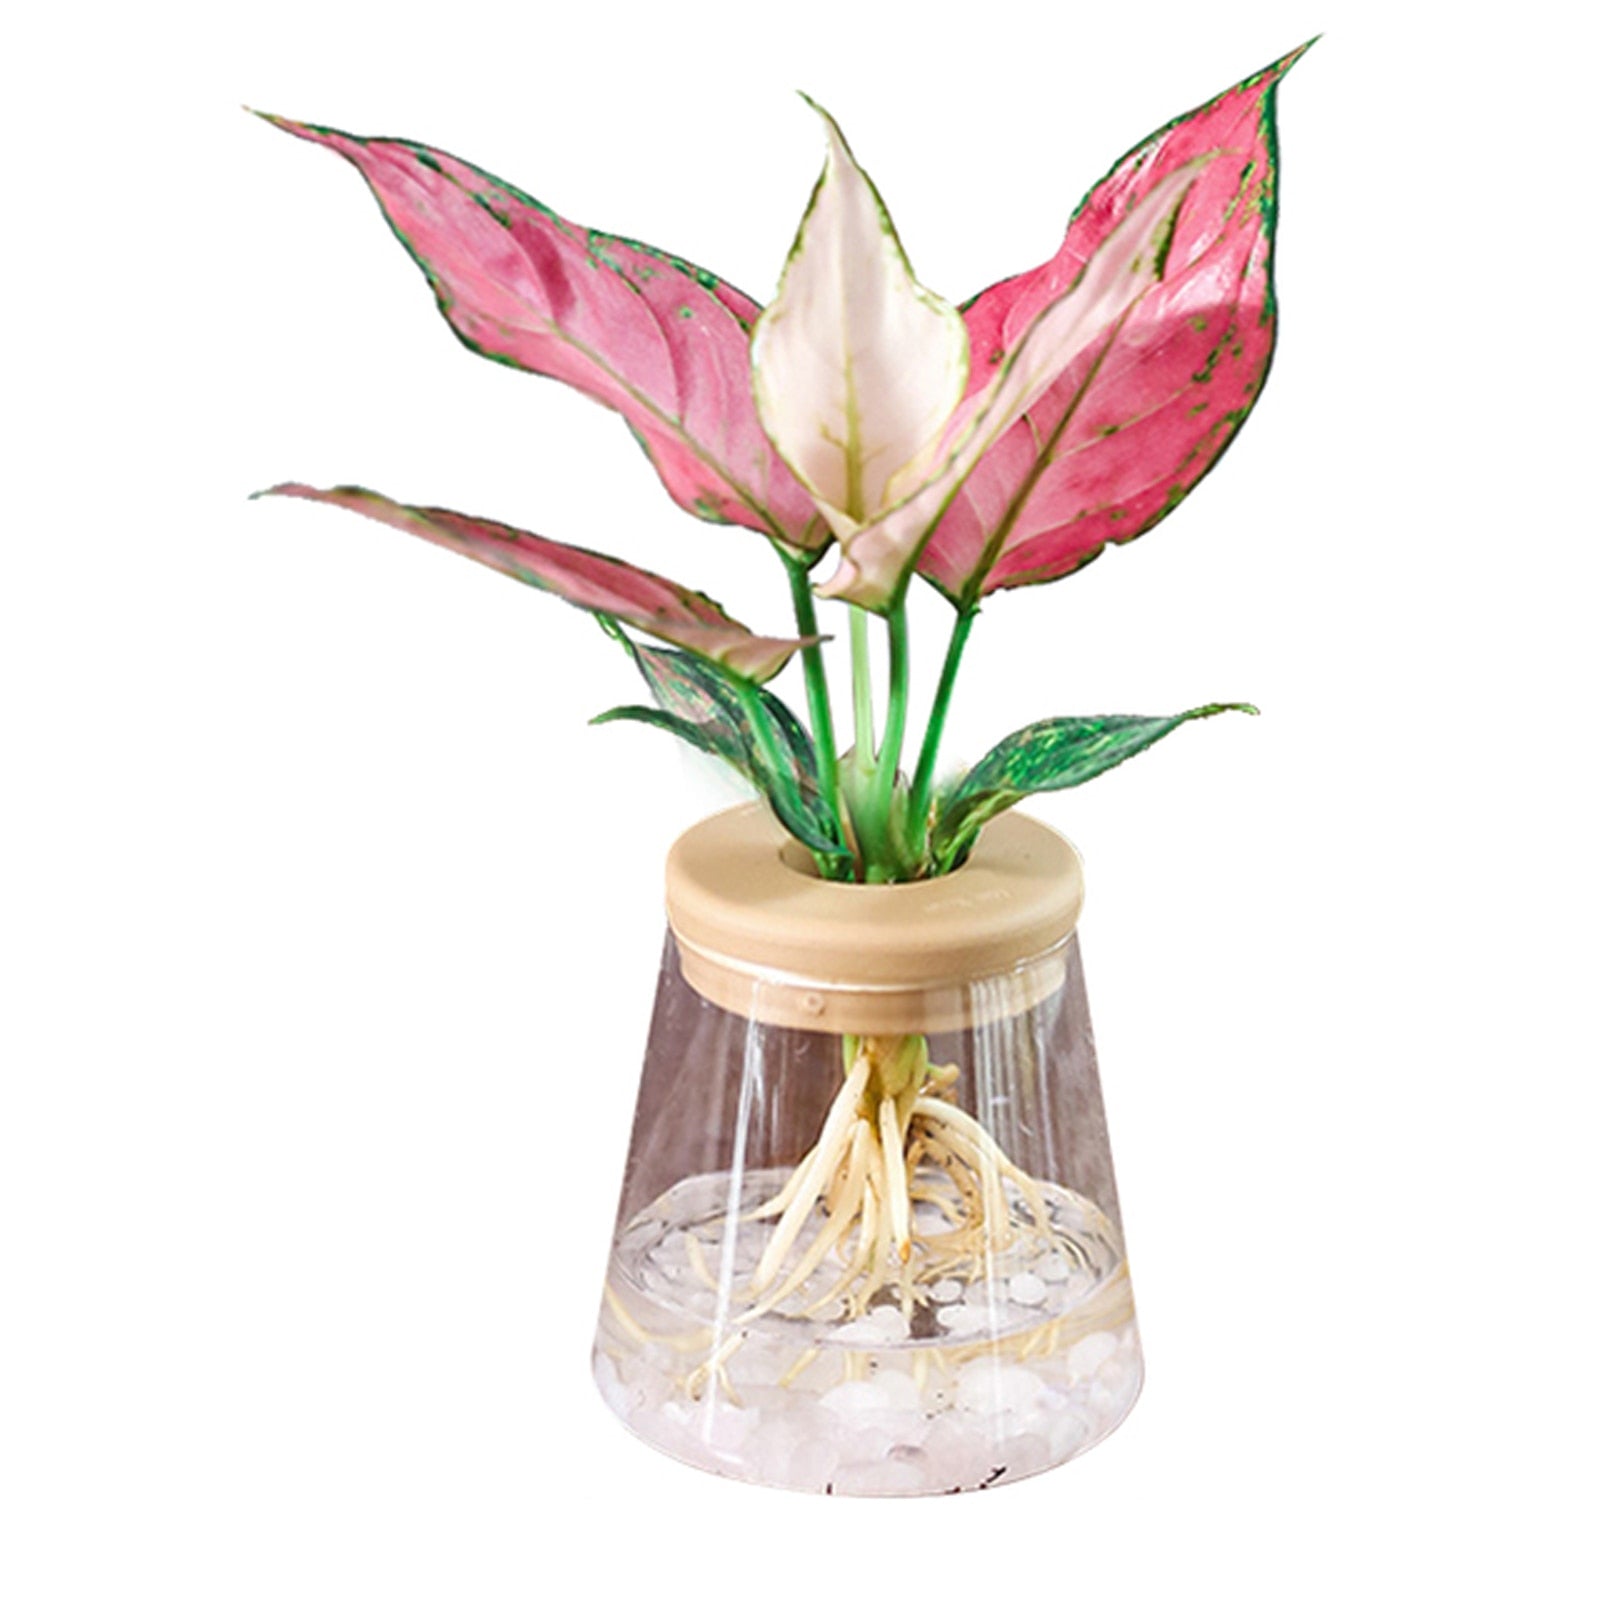 Mini Hydroponic Flower Pot Vase.